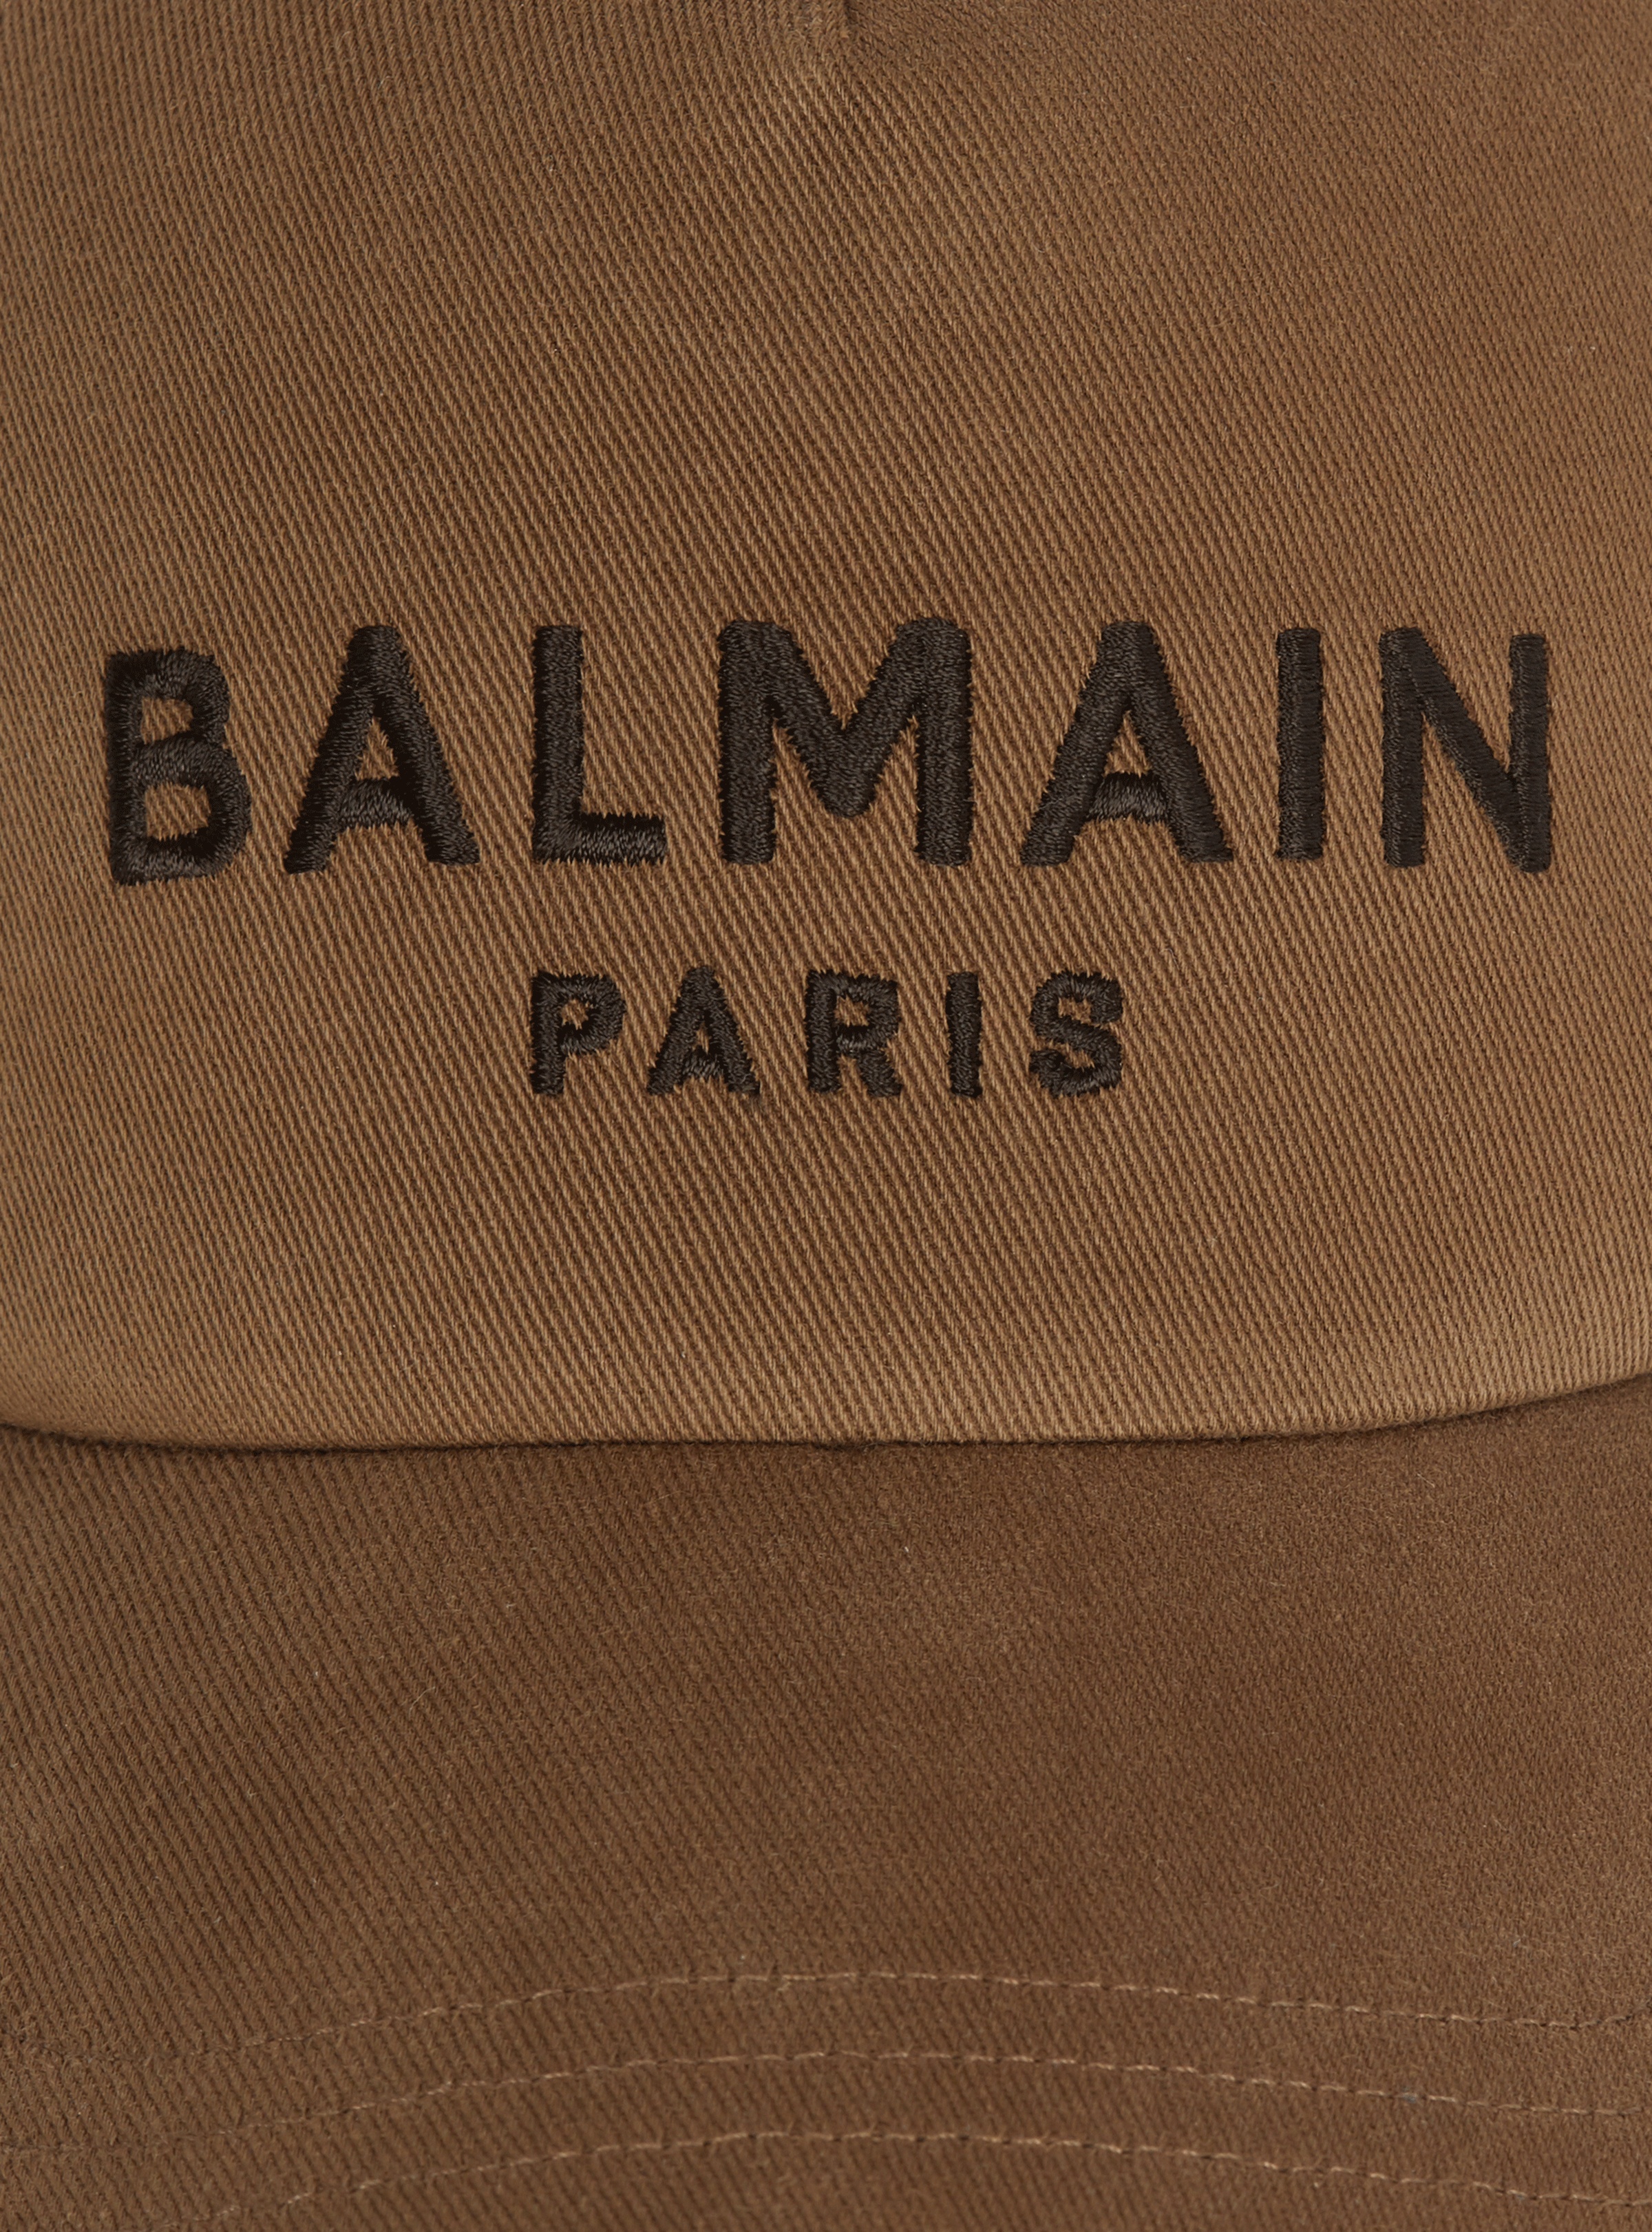 Embroidered Balmain cap - 5